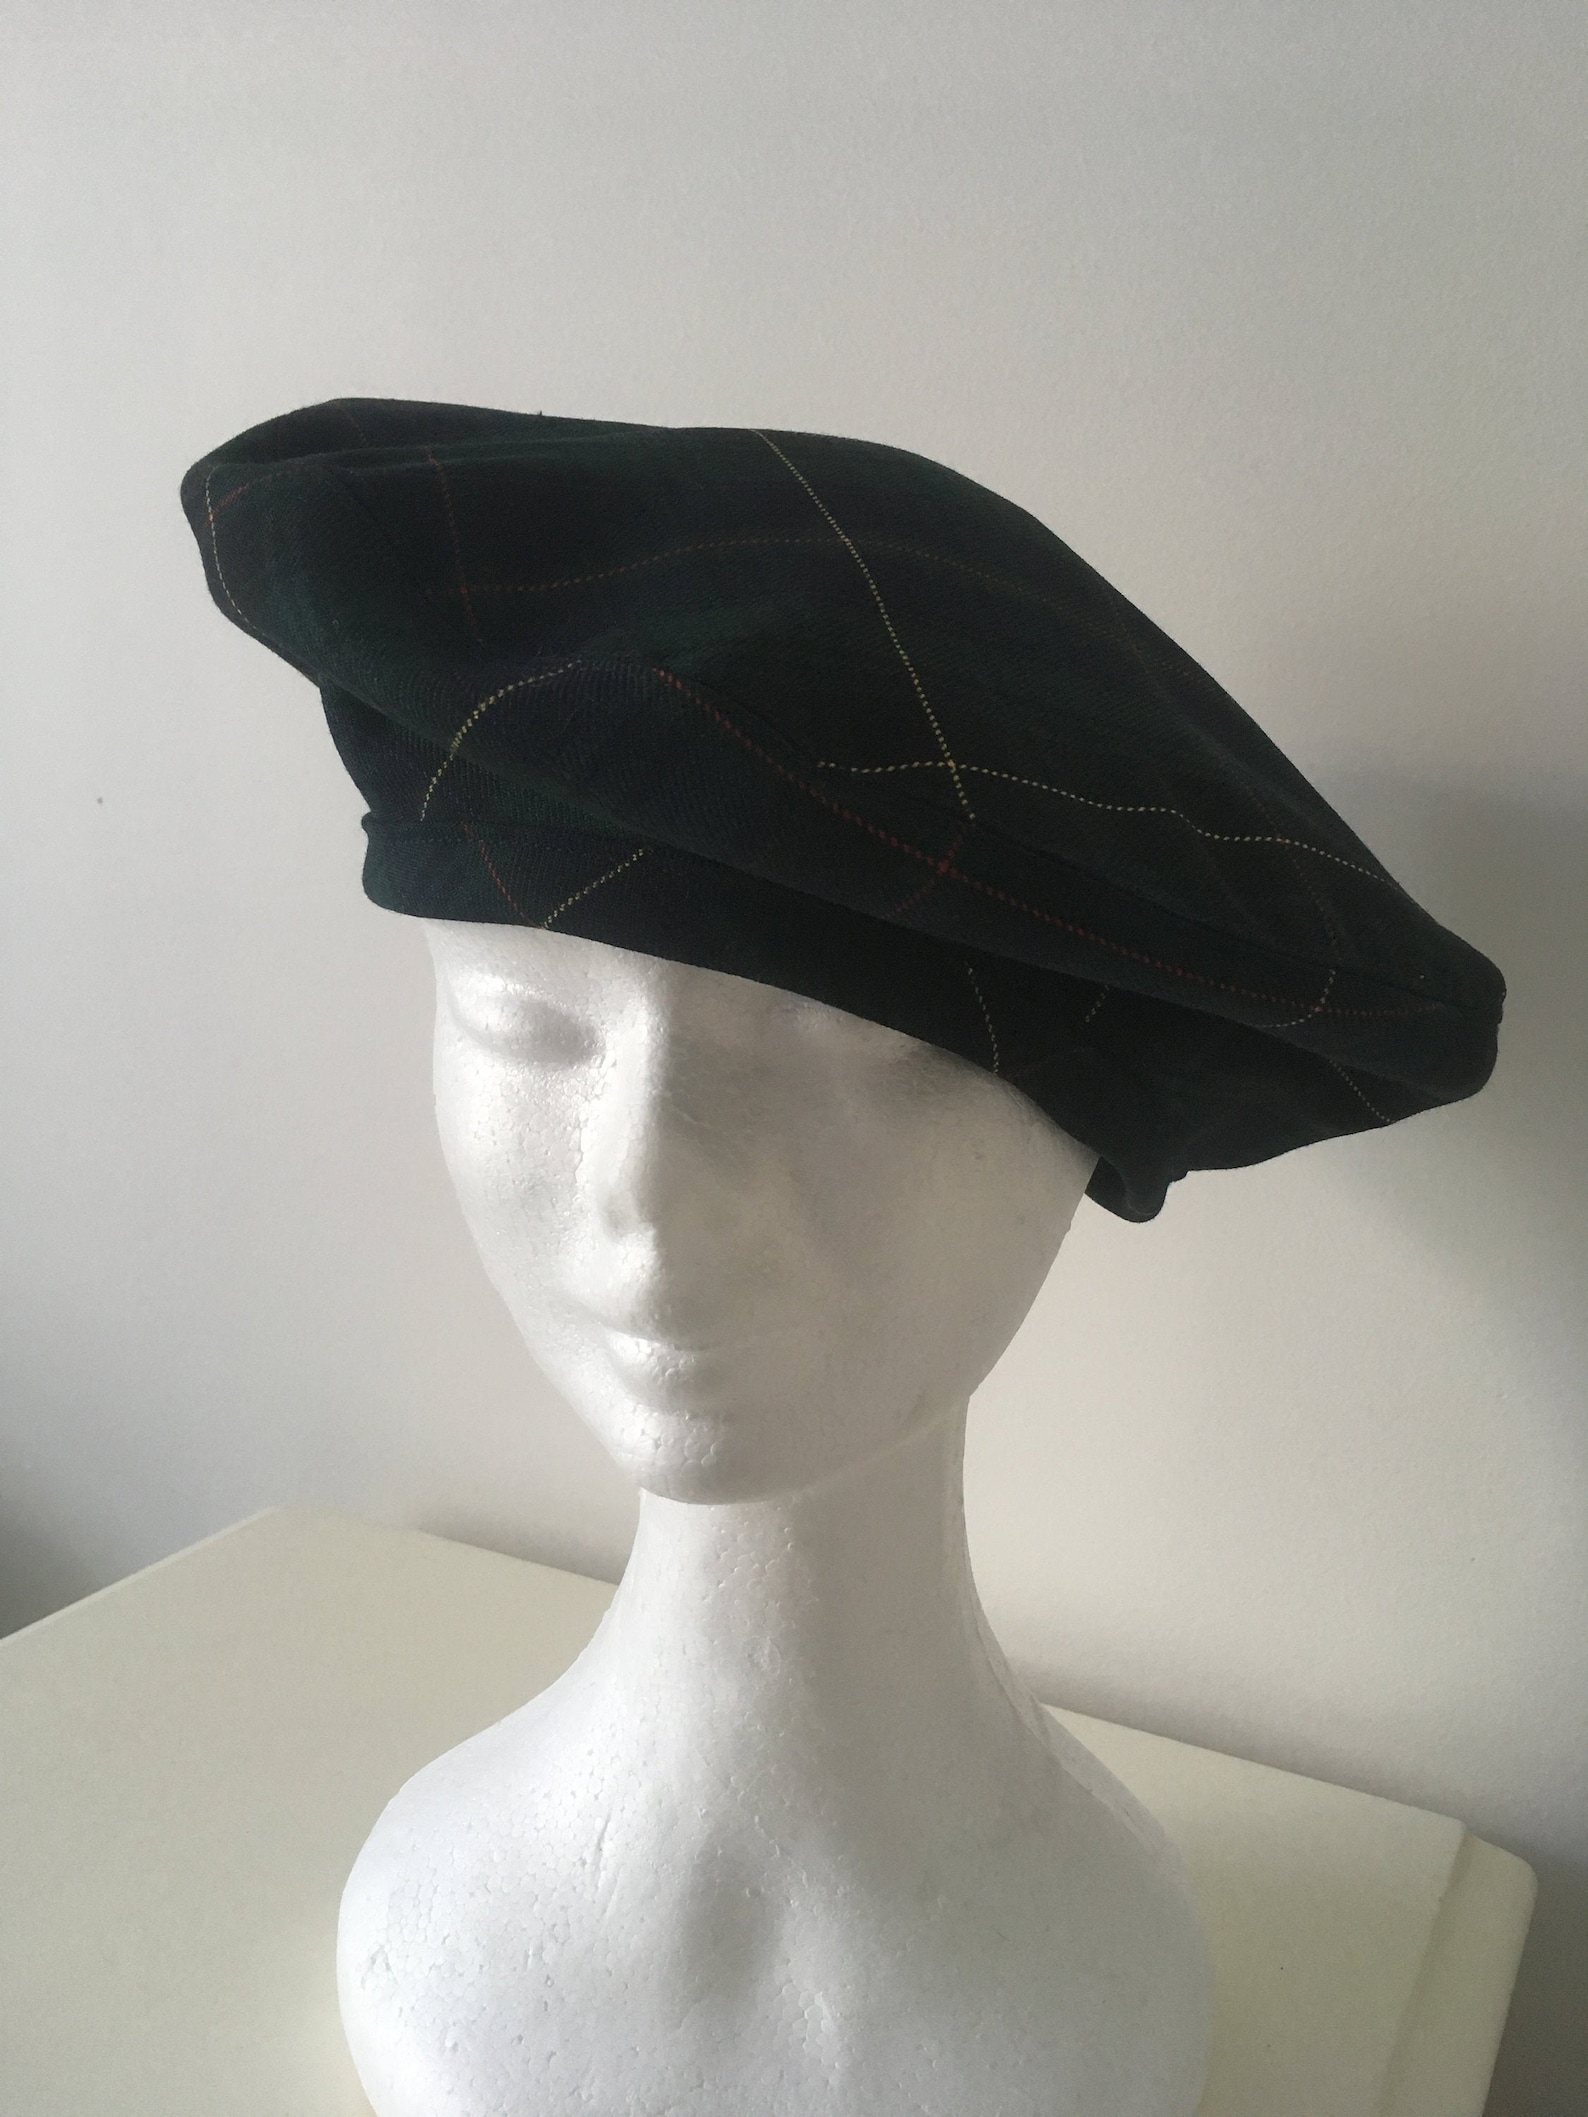 Tartan beret women's or teen's beret French beret | Etsy